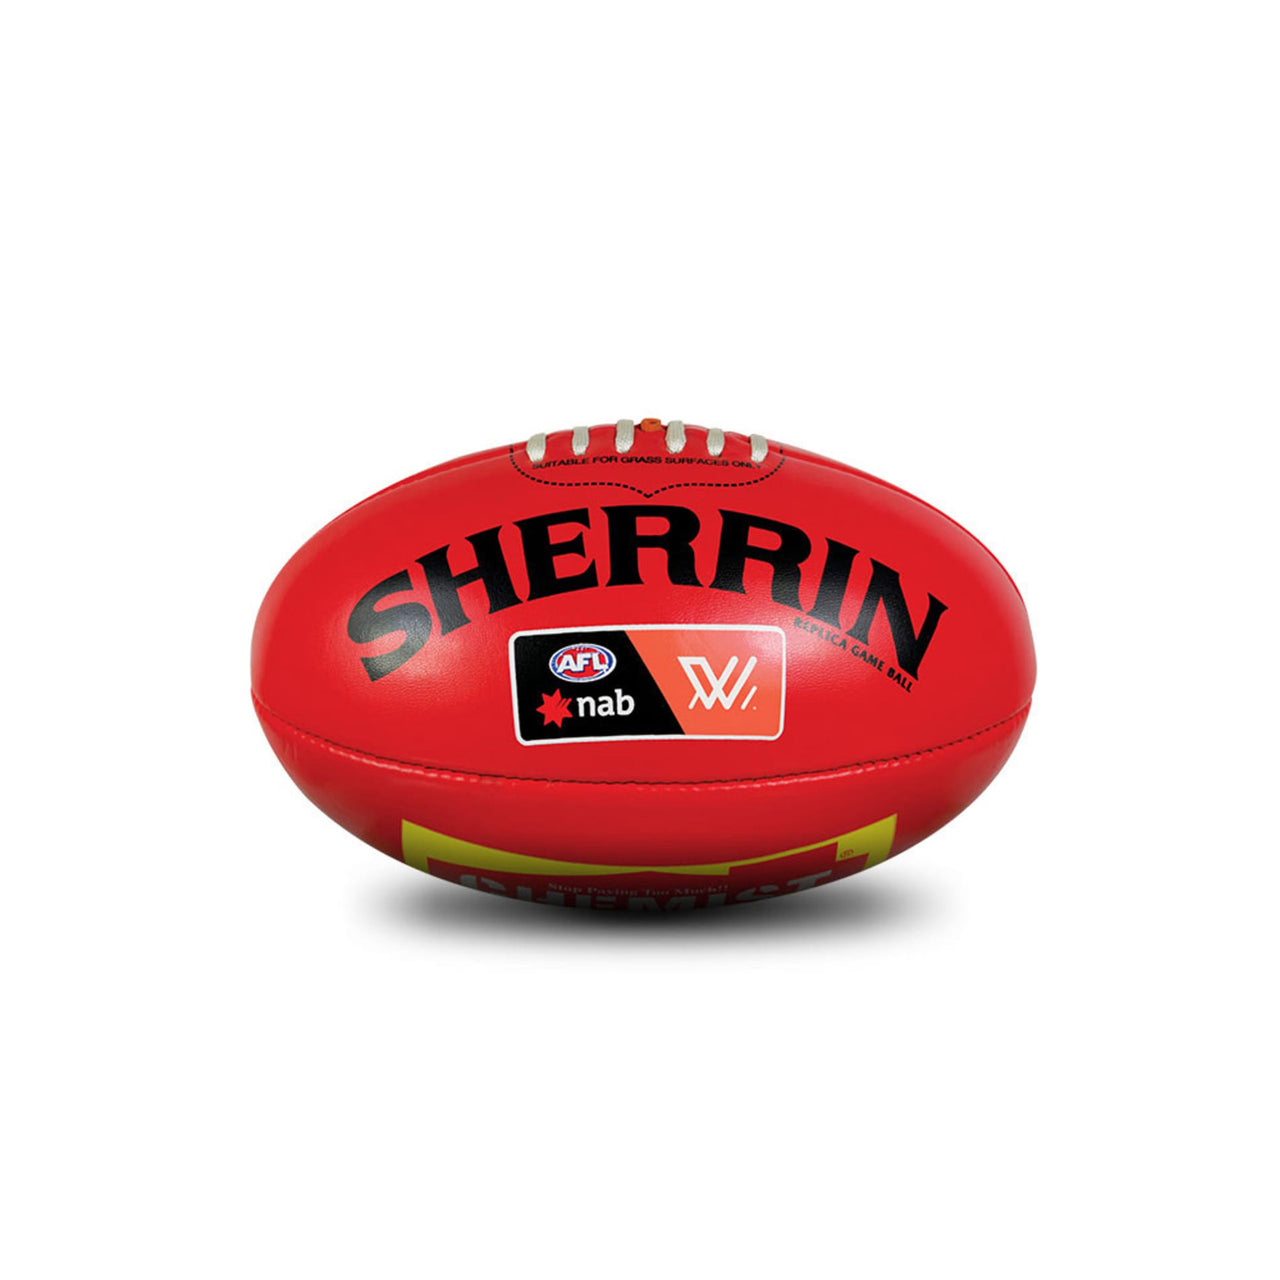 Sherrin AFLW replica mini ball